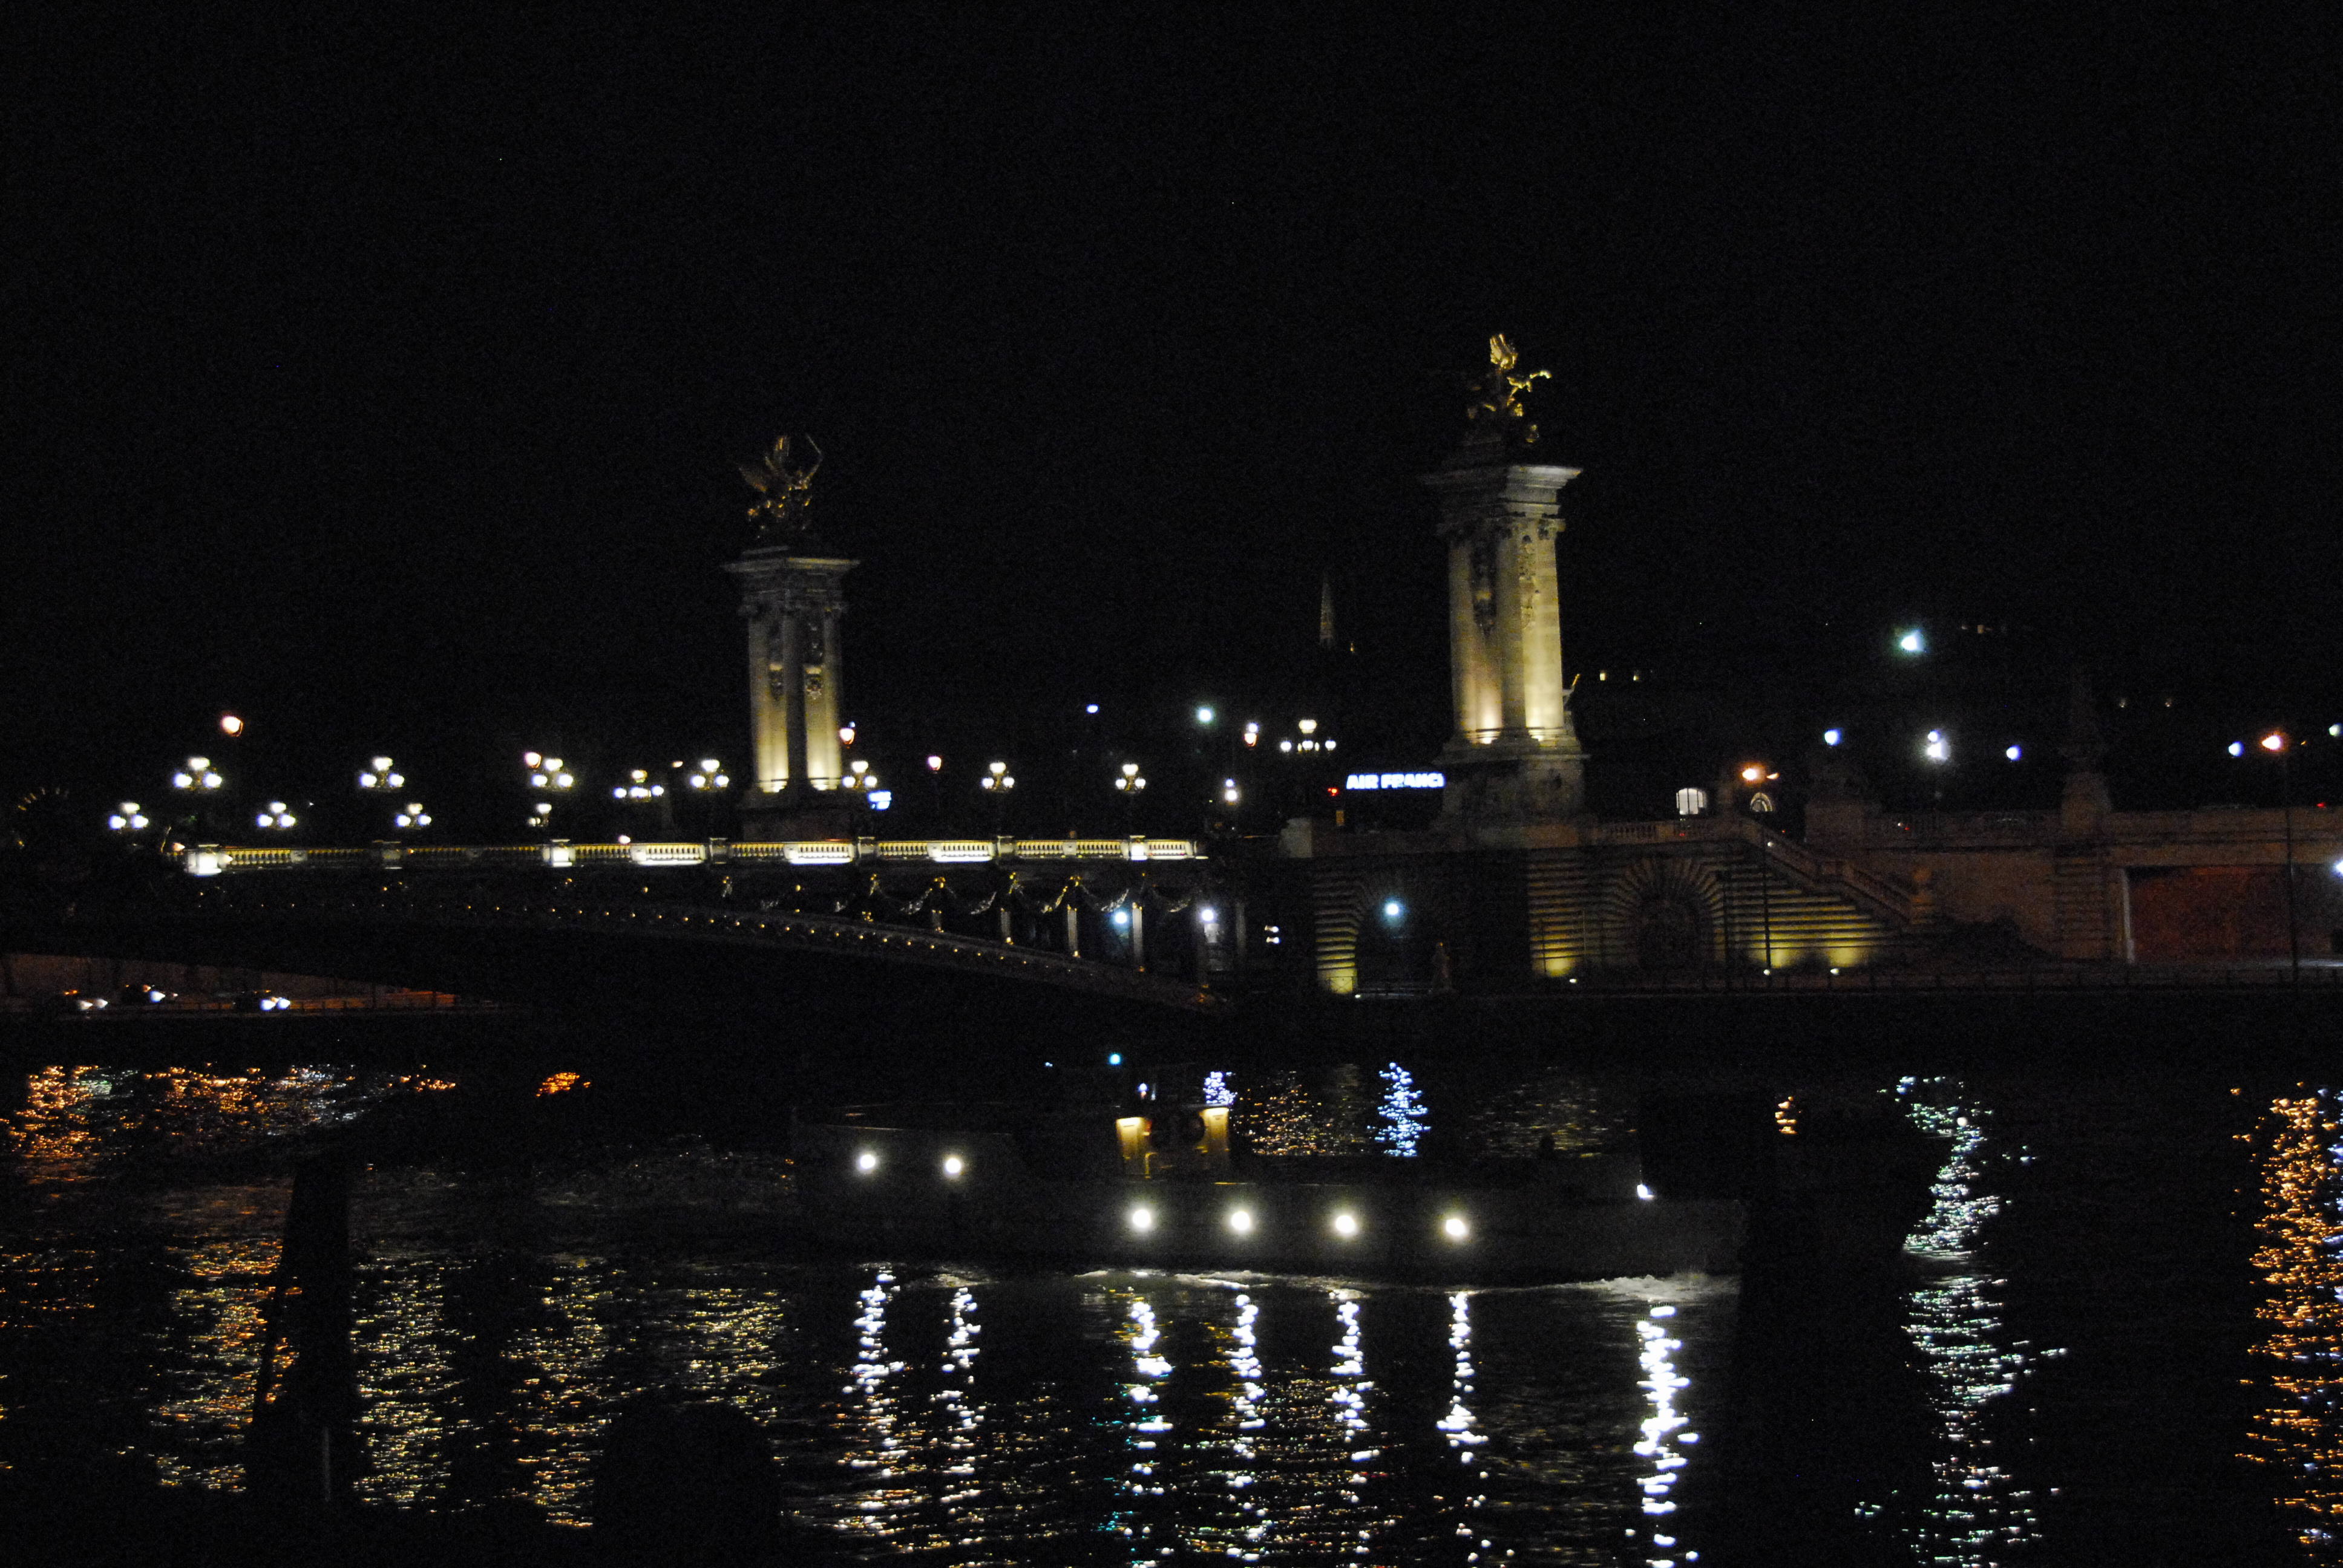 Lights on the Seine